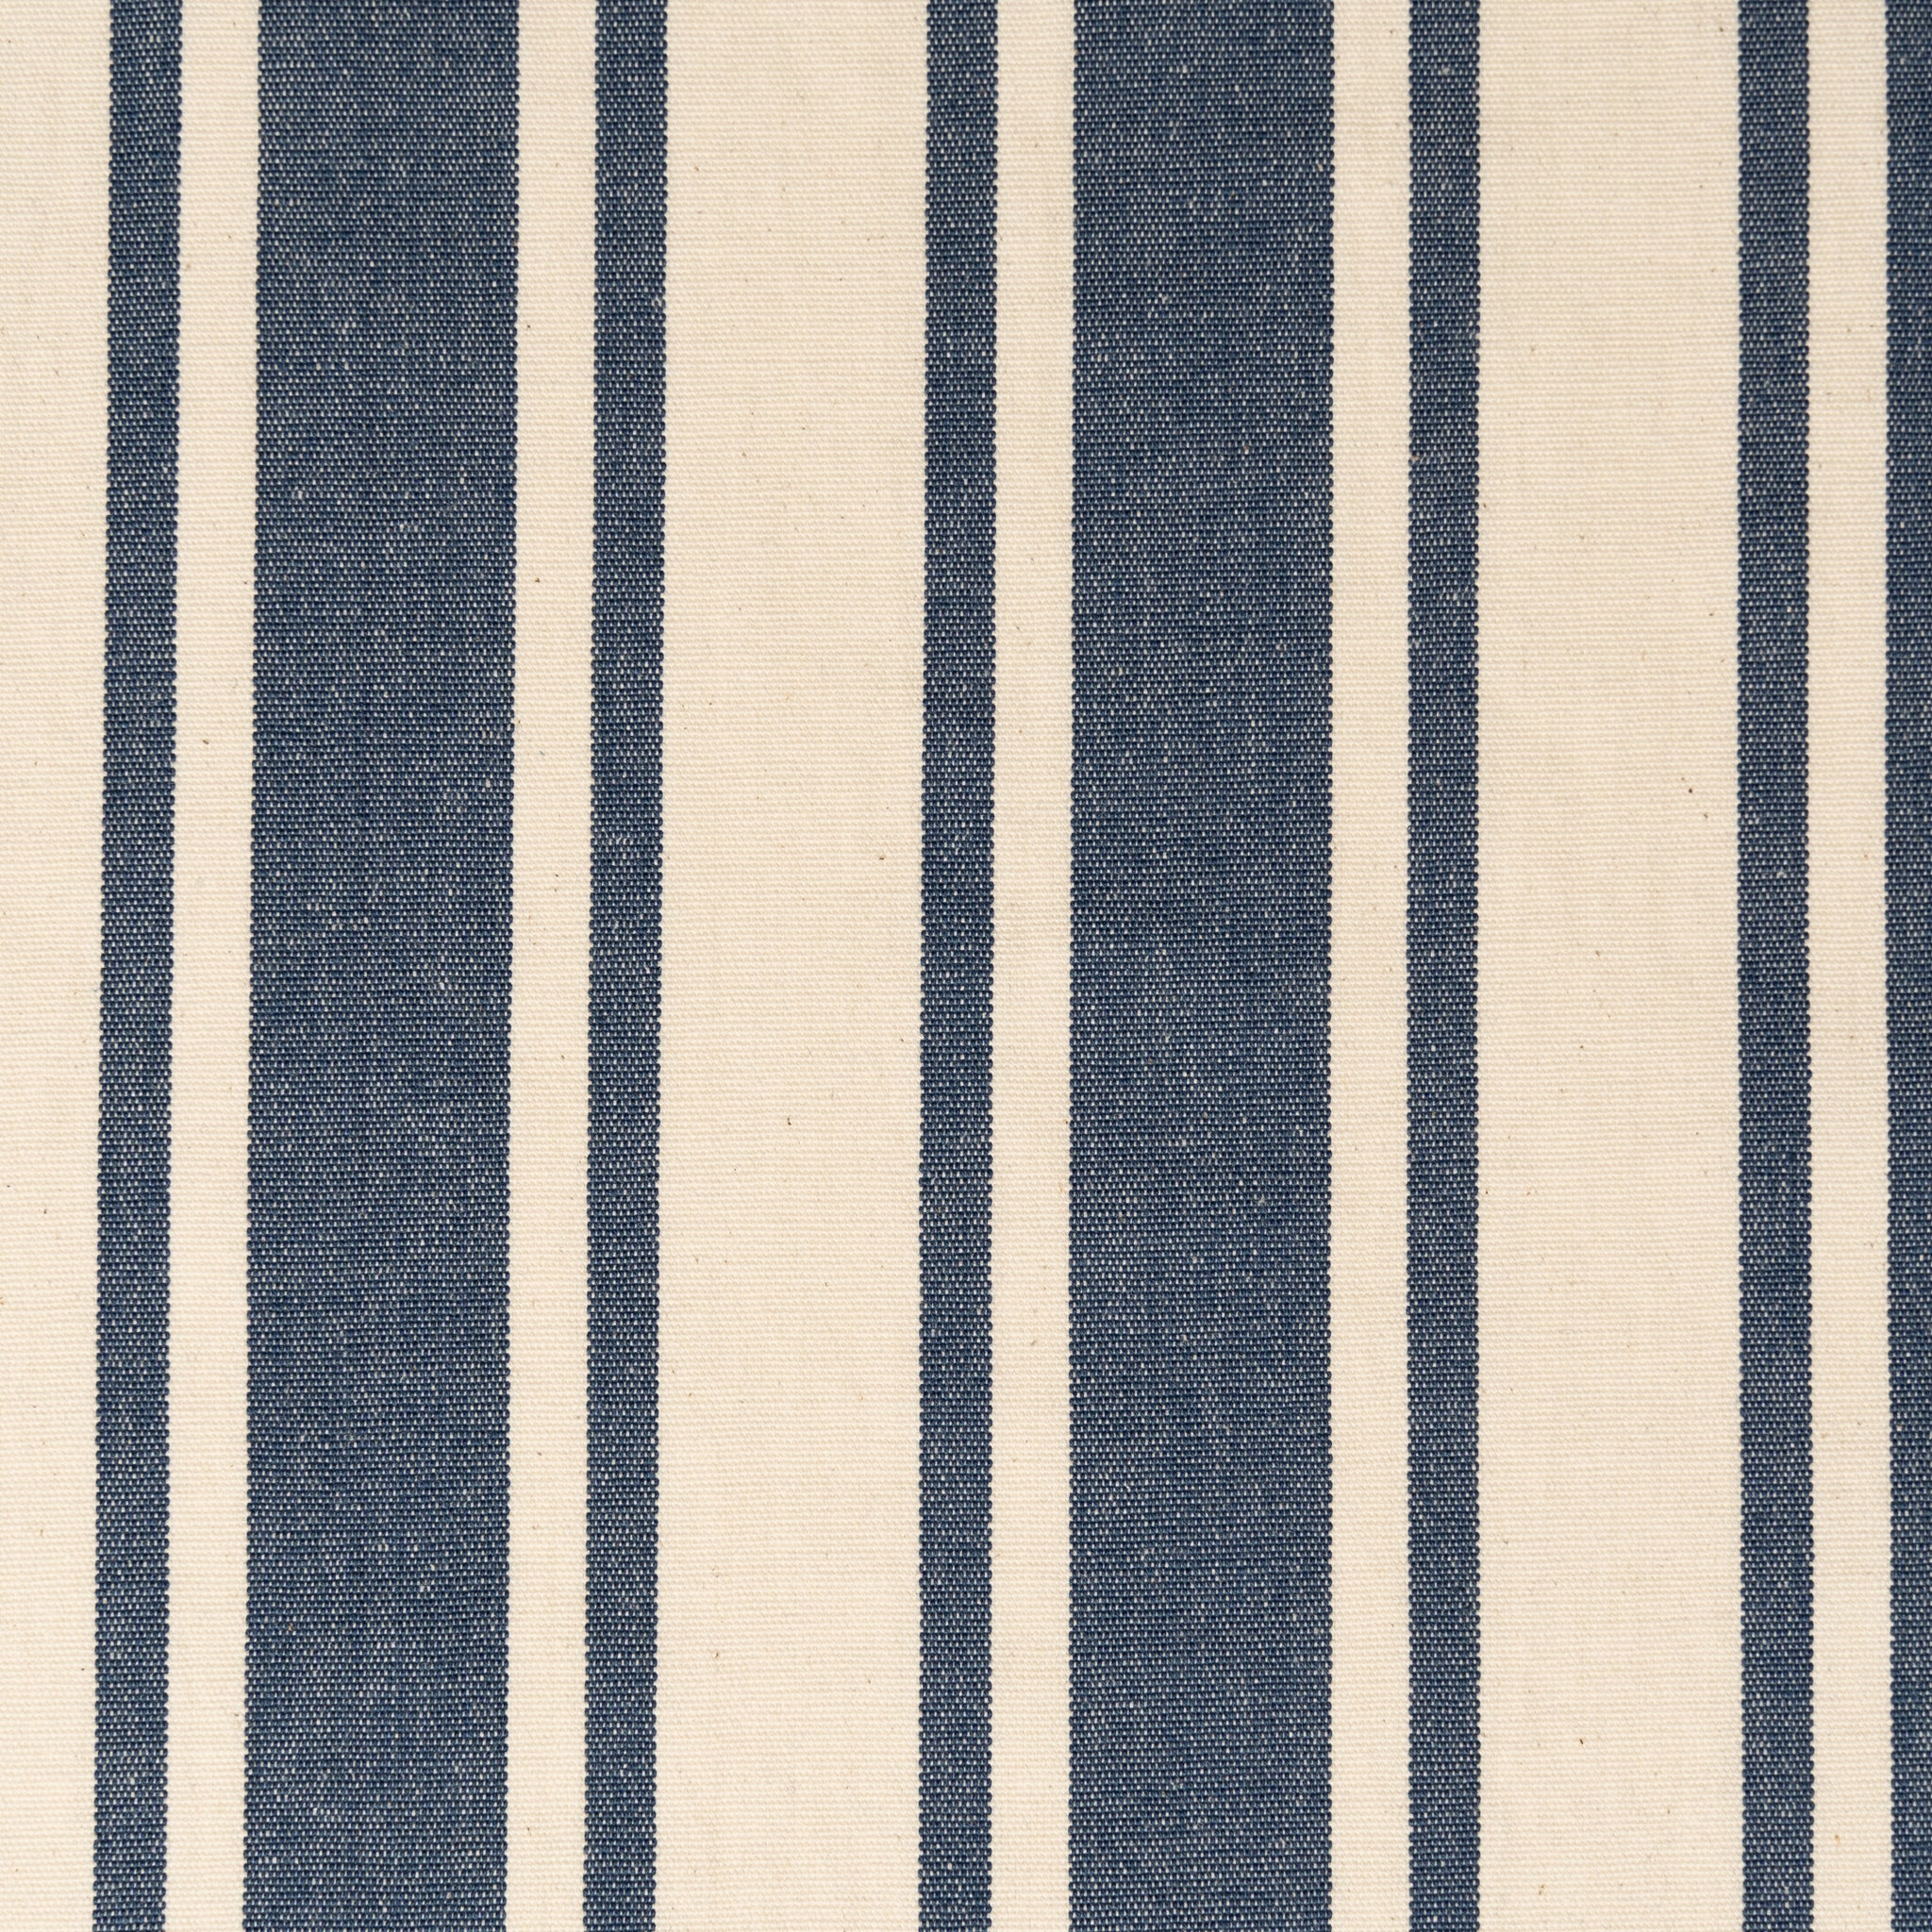 Woven Striped Fabric - Fishguard - Mood Indigo